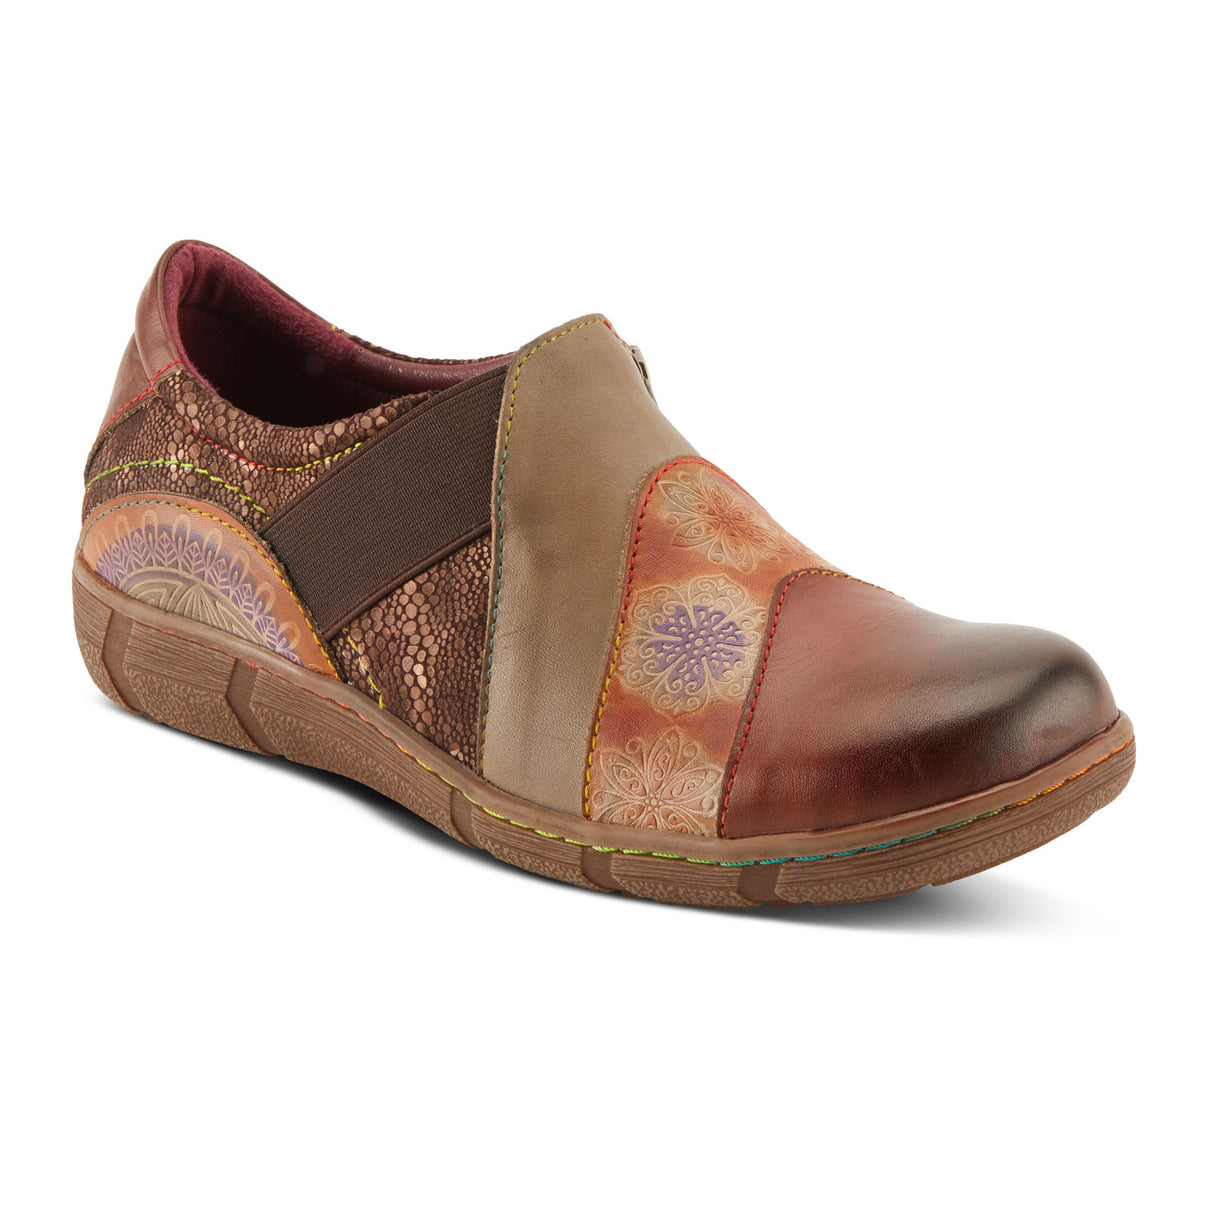 L'Artiste Lata Slip On (Women) - Brown Multi Dress-Casual - Slip Ons - The Heel Shoe Fitters